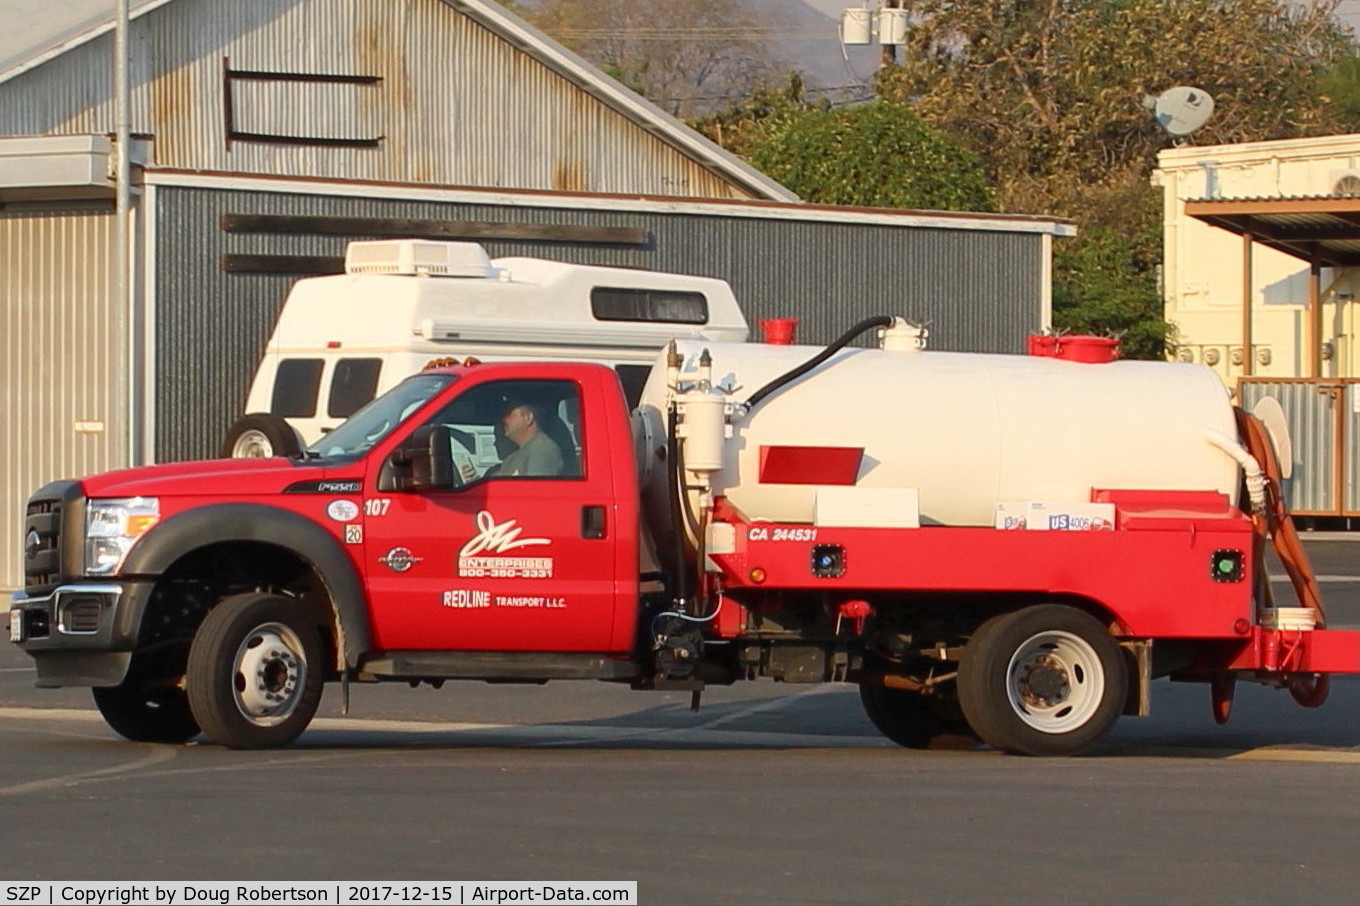 Santa Paula Airport (SZP) - FireBomber support vehicle-the Thomas Fire